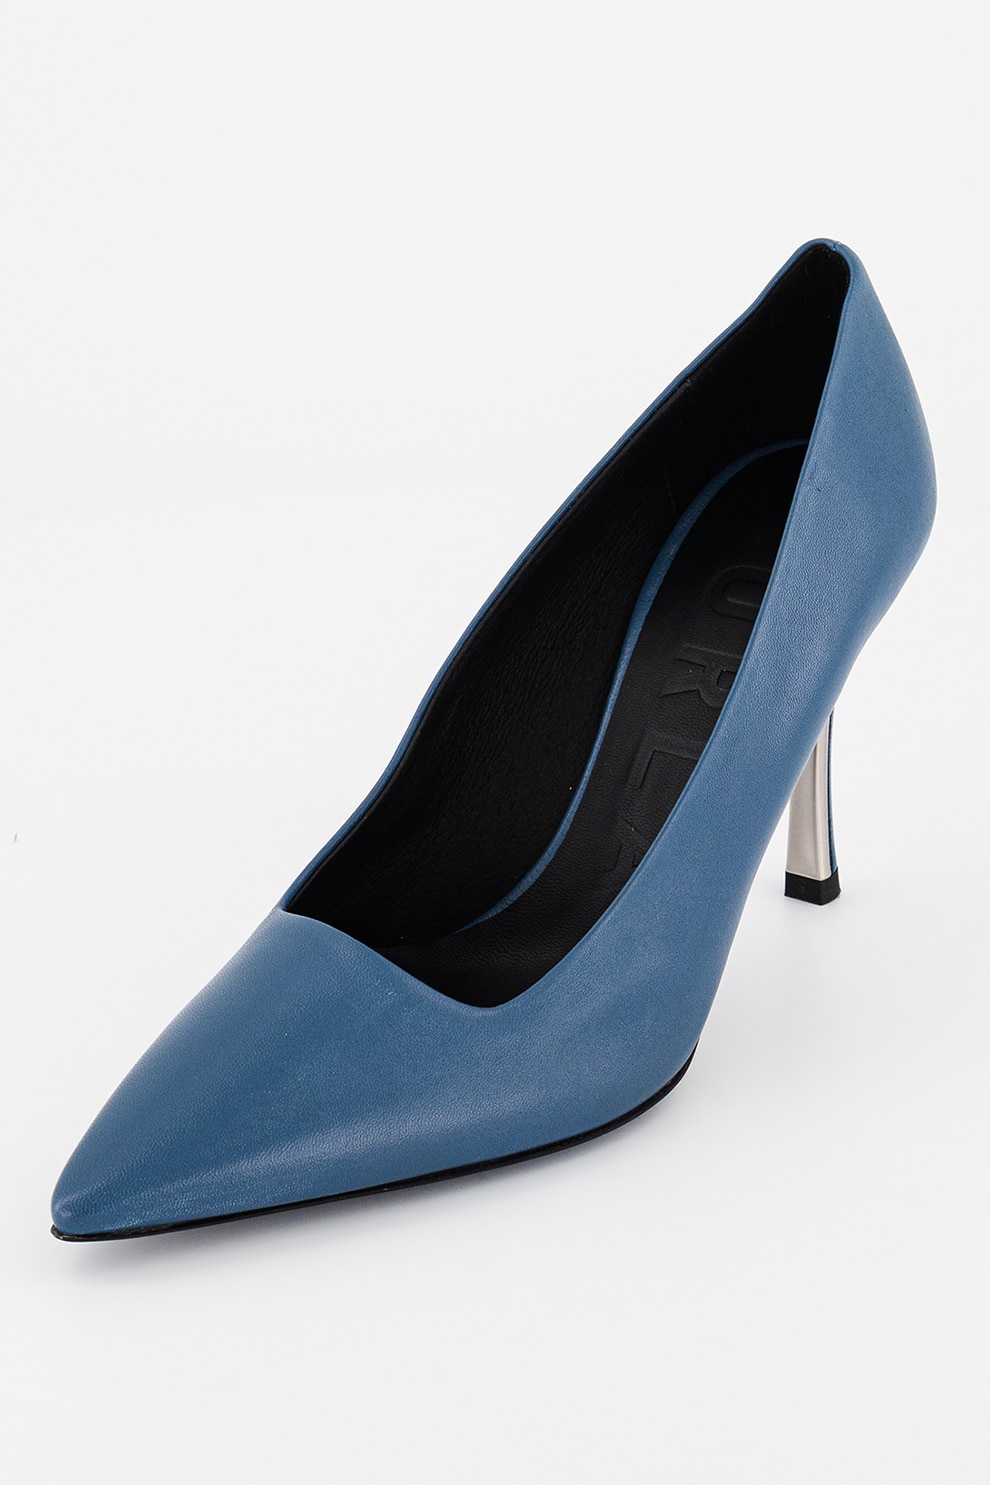 Arabic Cruel Adelaide Furla, Pantofi stiletto de piele Code, Albastru inchis, 36 - eMAG.ro